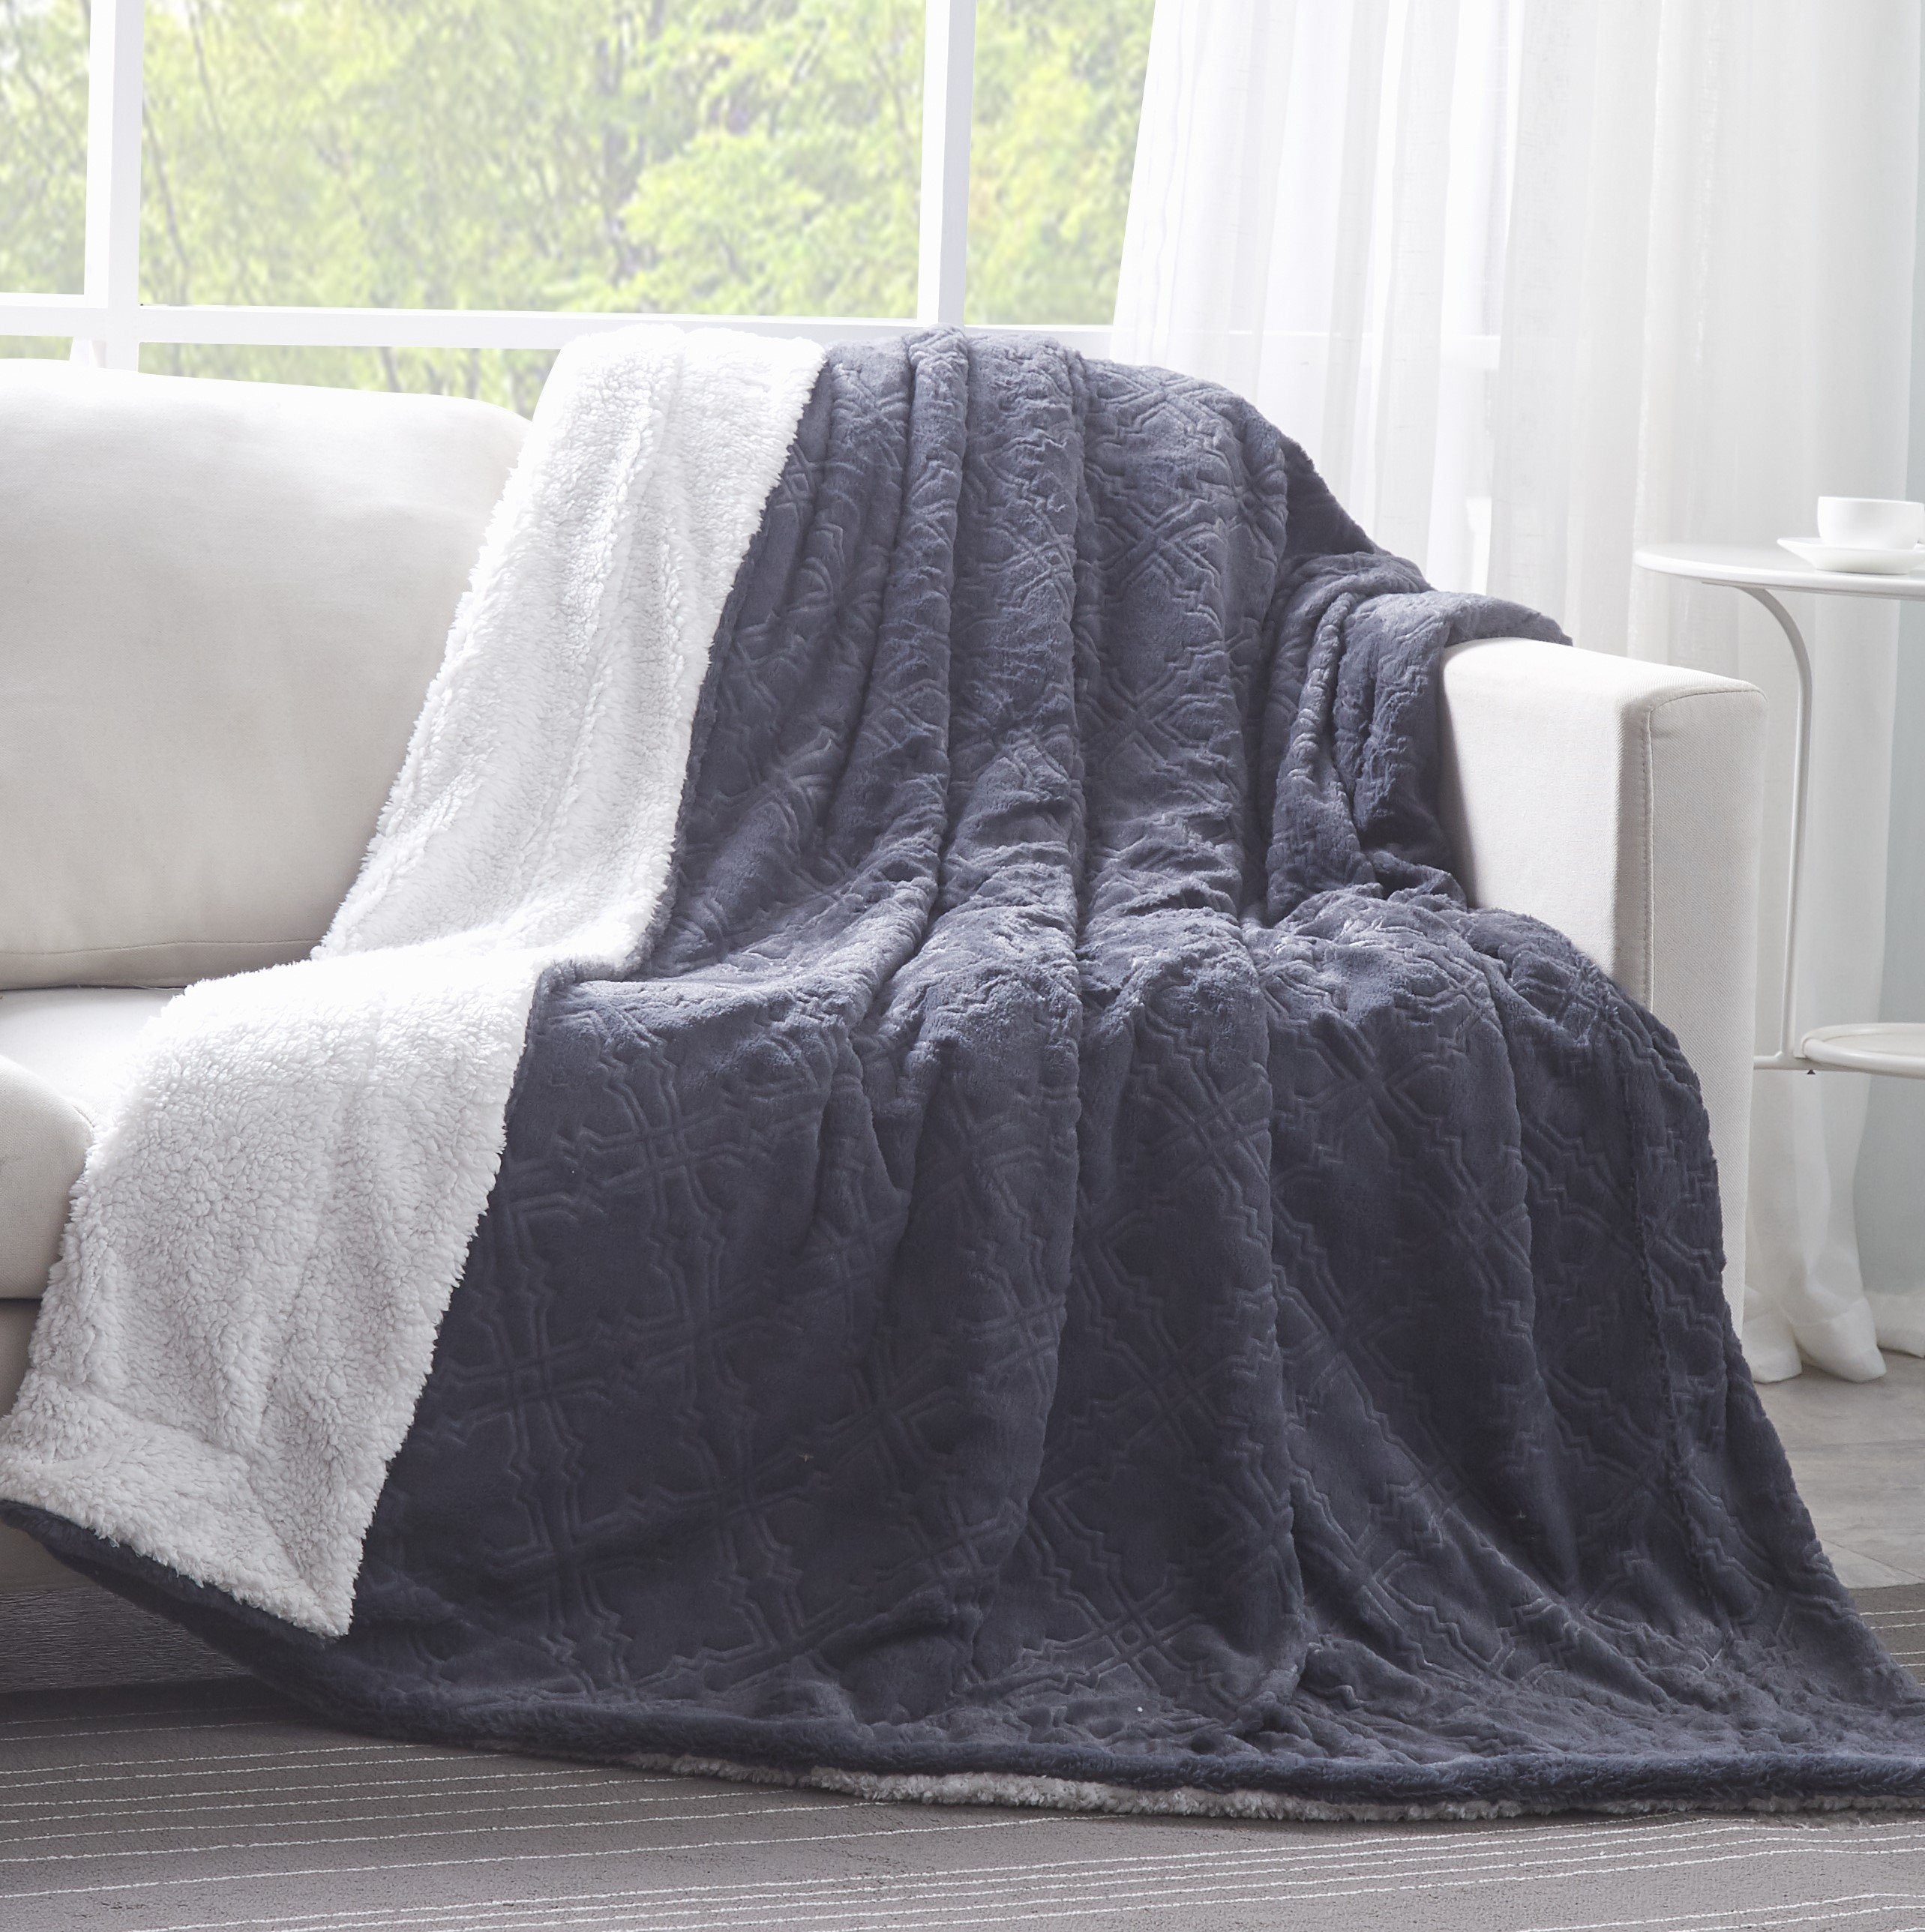 Snug-Rug Soft Fleece Blanket Sherpa Throw (Purple)